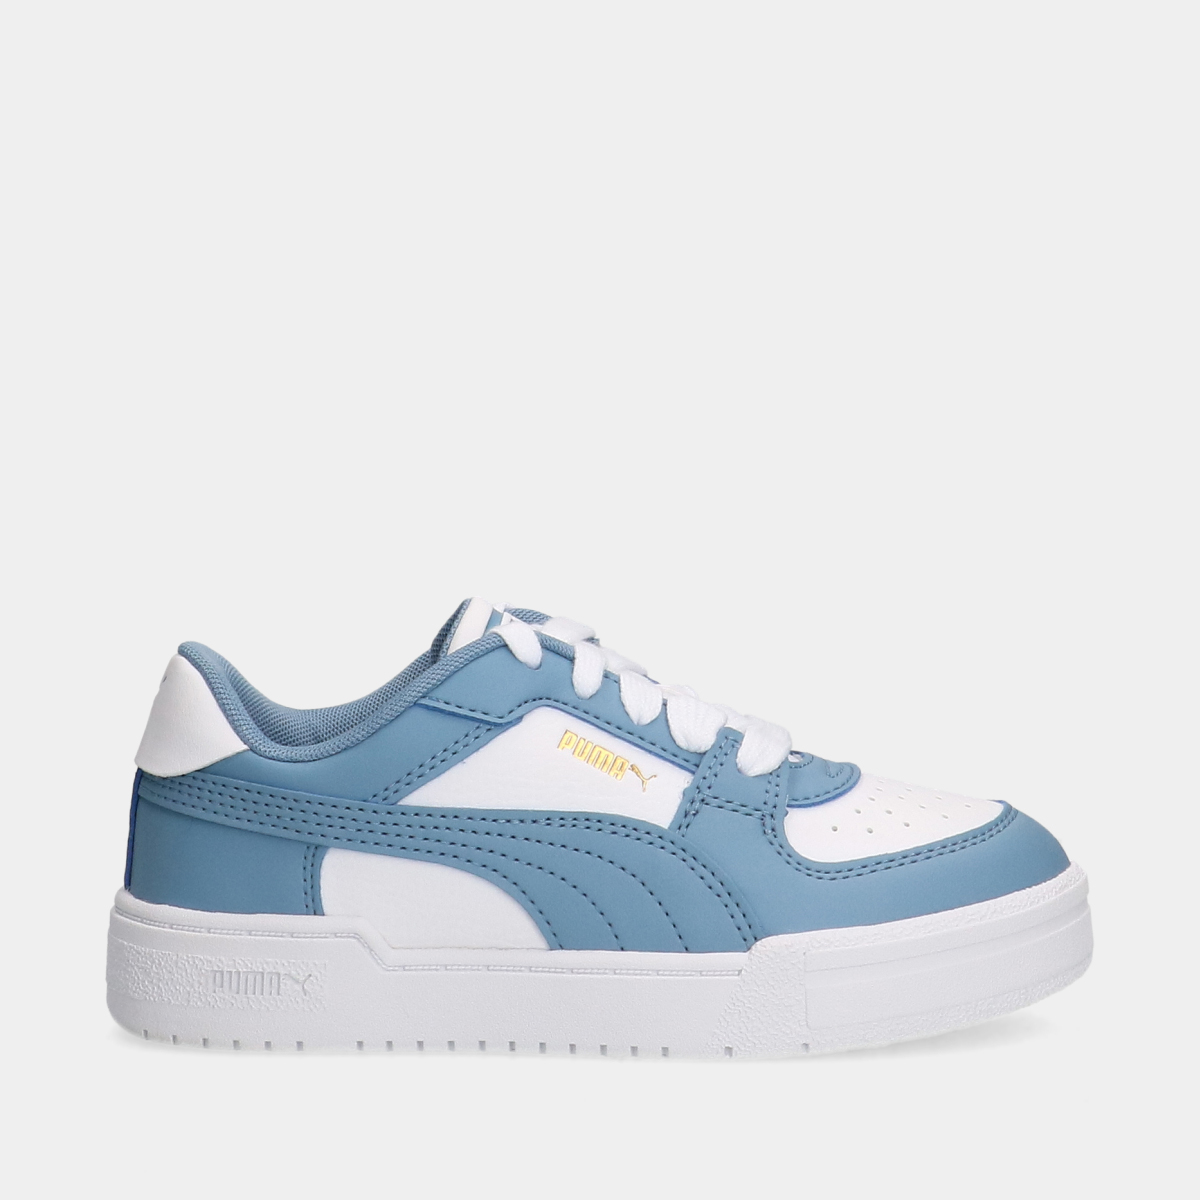 Puma CA pro classic white/blue kinder sneakers